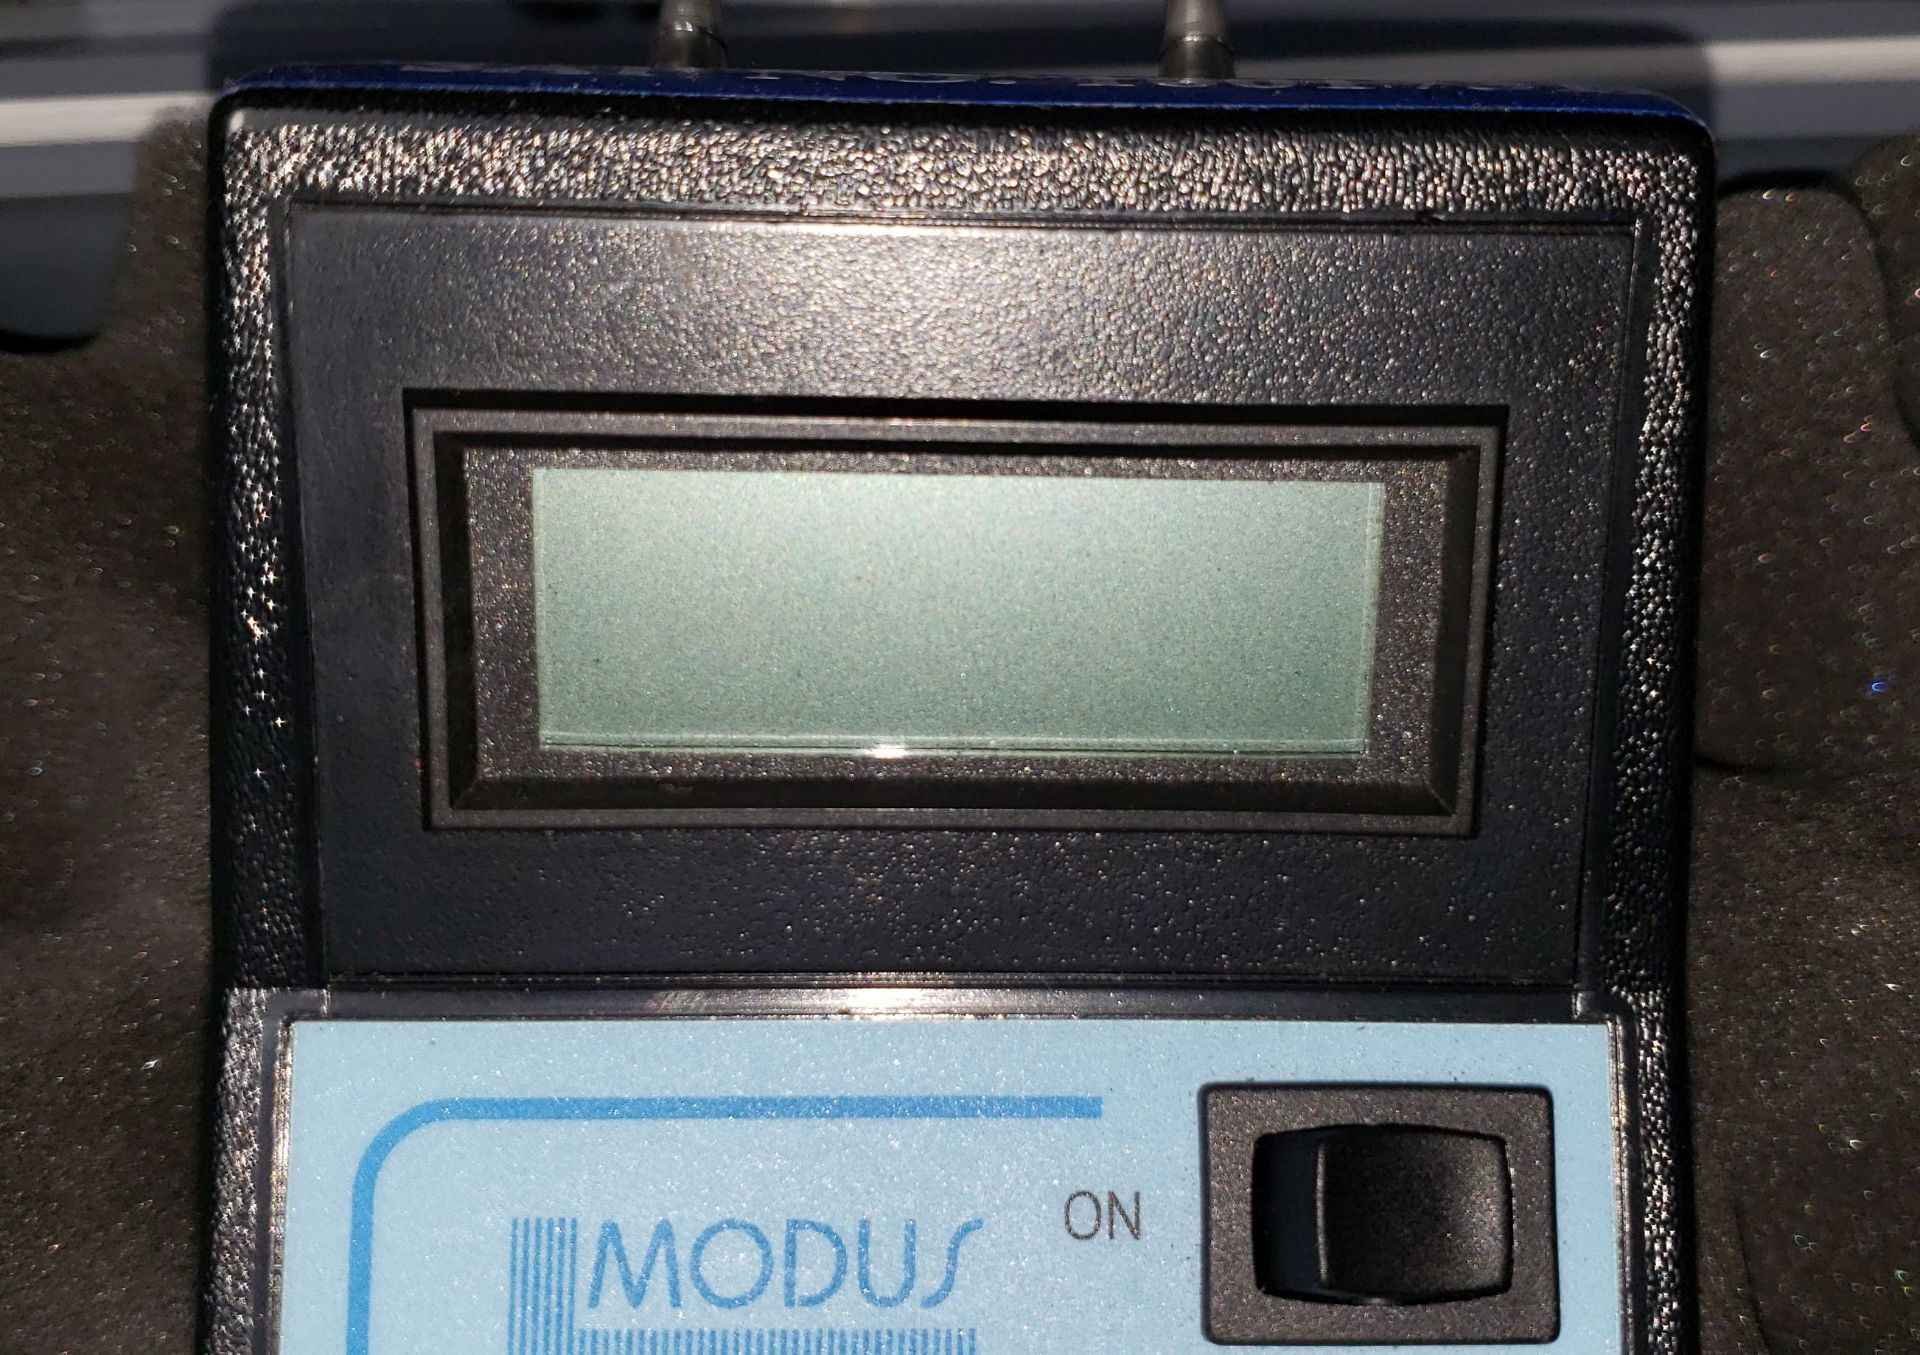 Modus Digital Manometer, model MA202E - Image 4 of 4